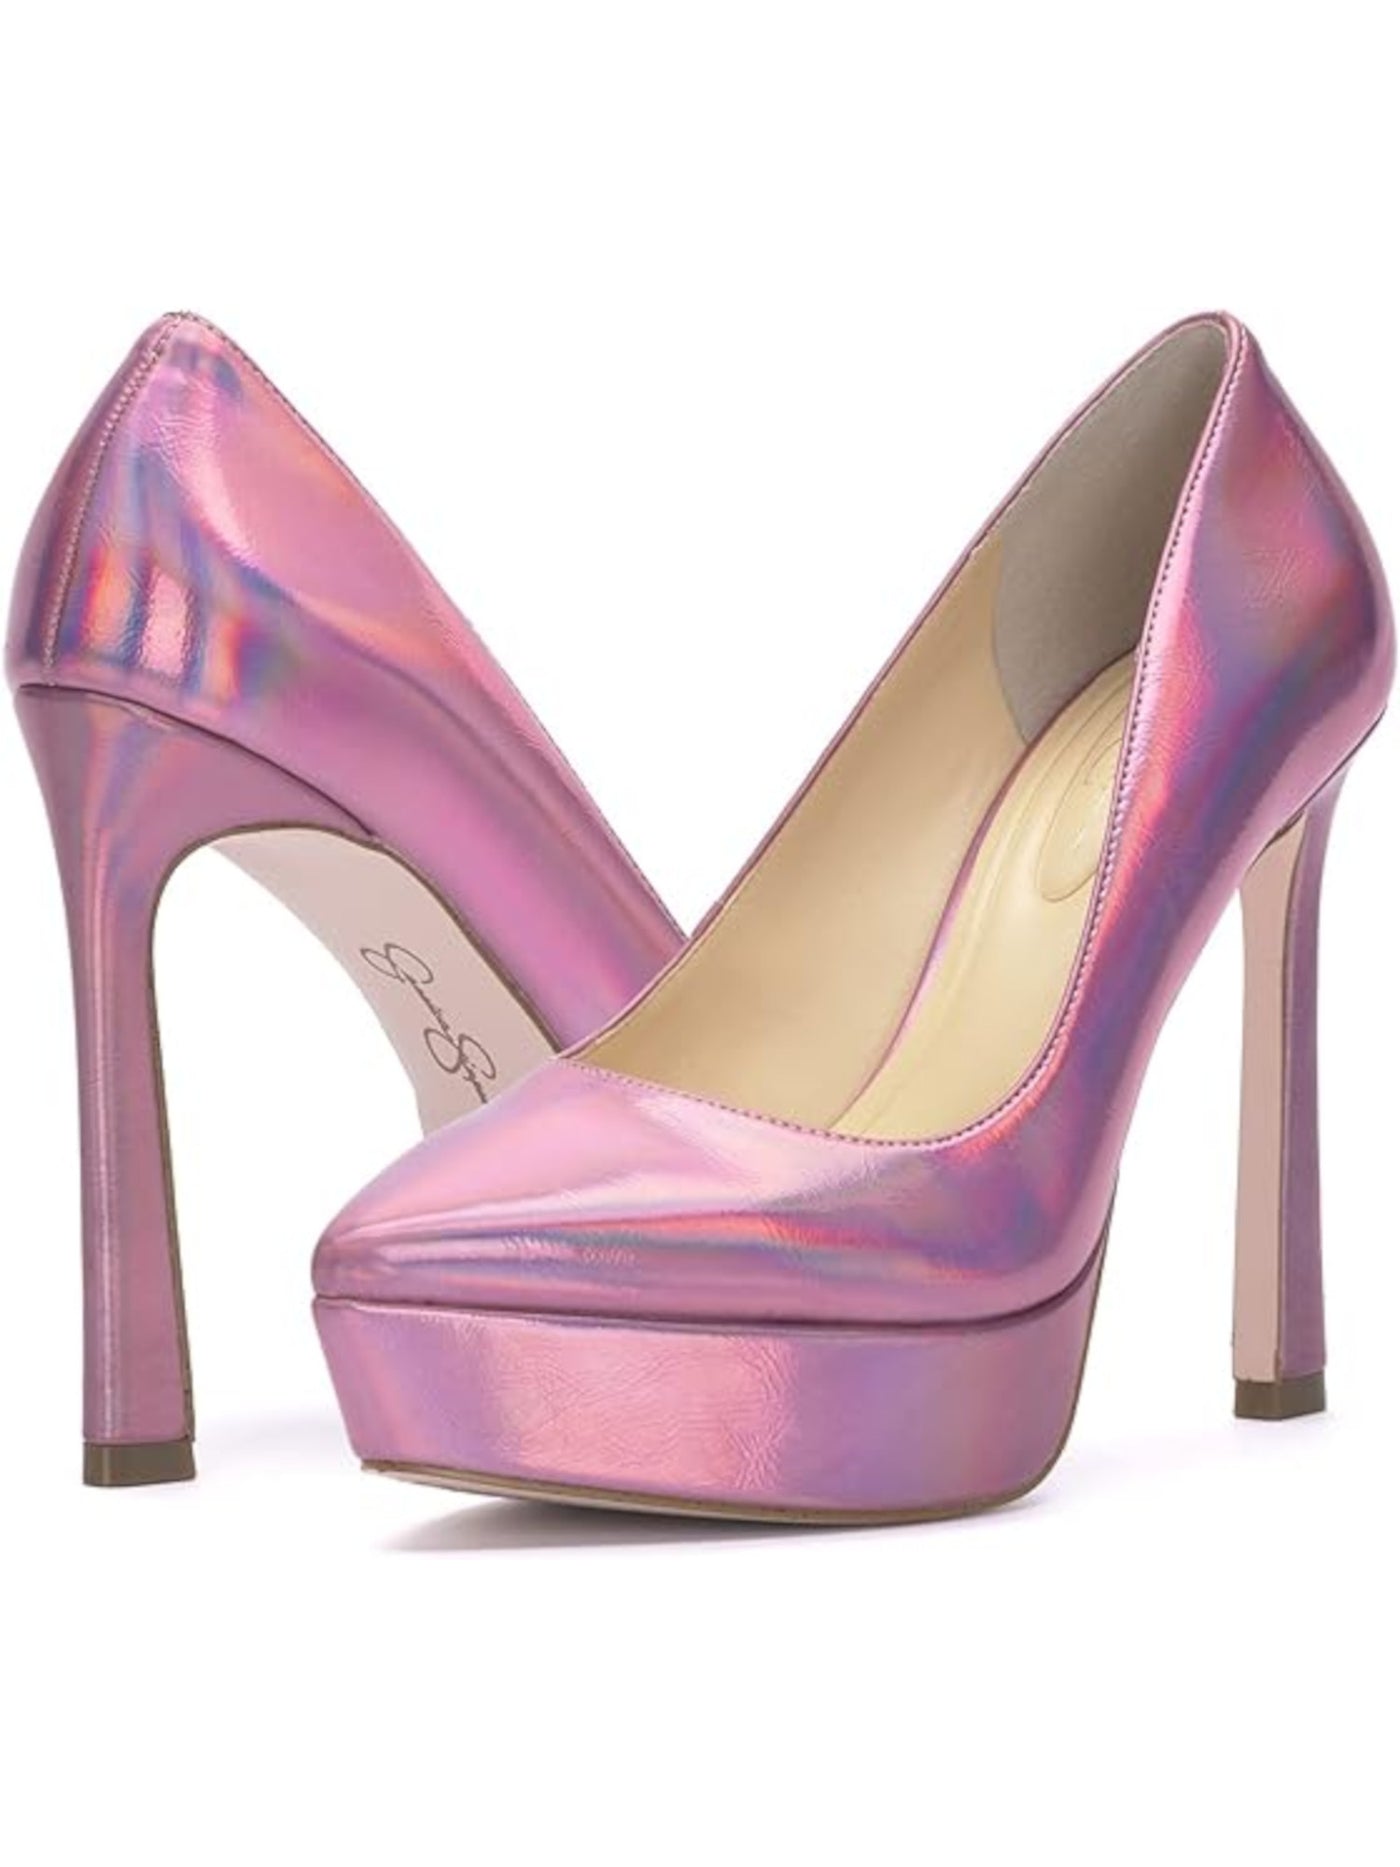 JESSICA SIMPSON Womens Pink 1" Platform Cushioned Jariah Pointed Toe Platform Slip On Dress Pumps Shoes 5 M